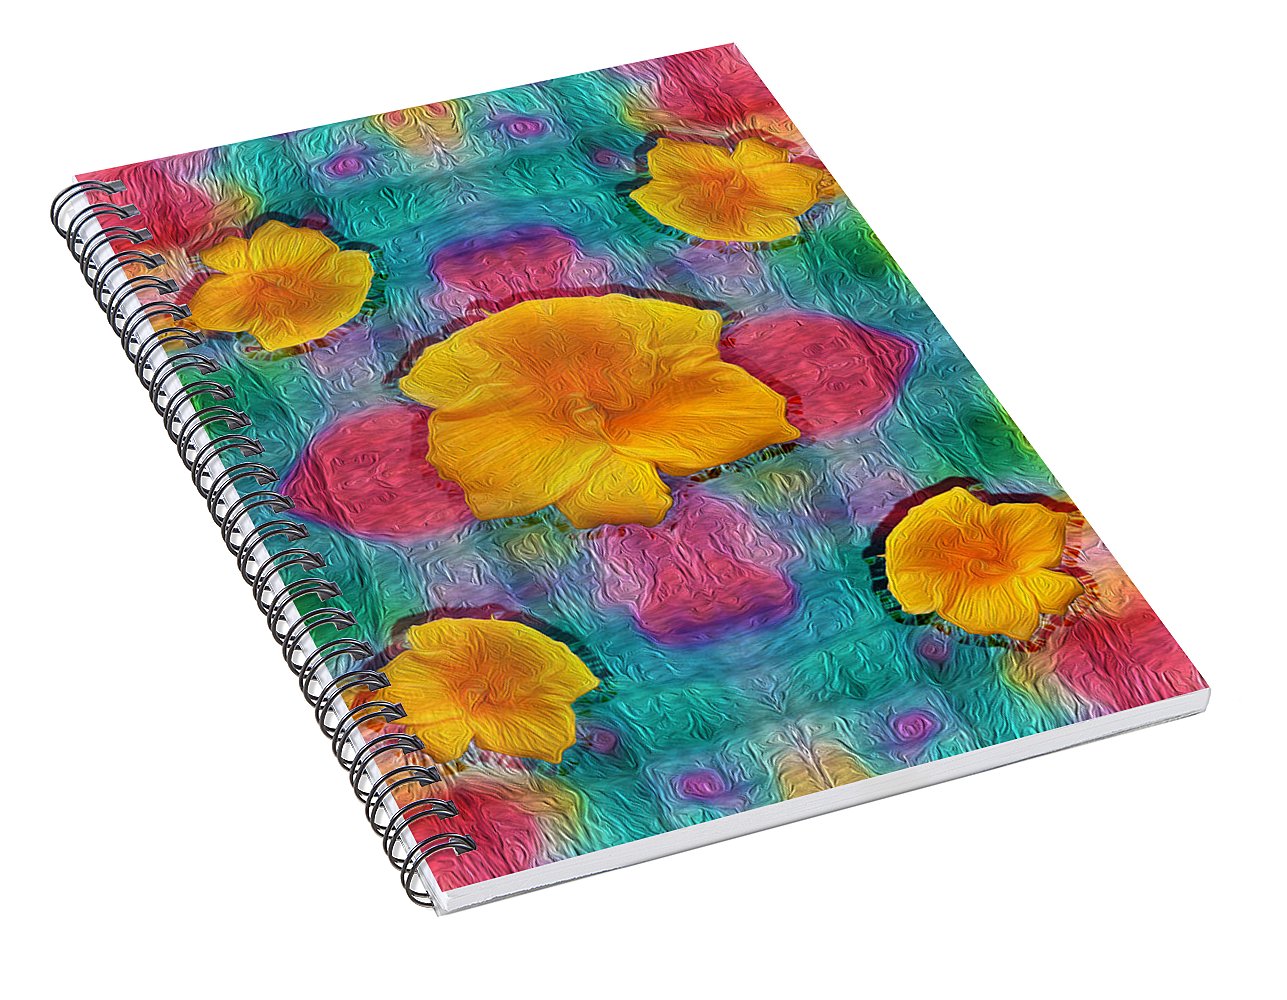 Flower Power - Spiral Notebook